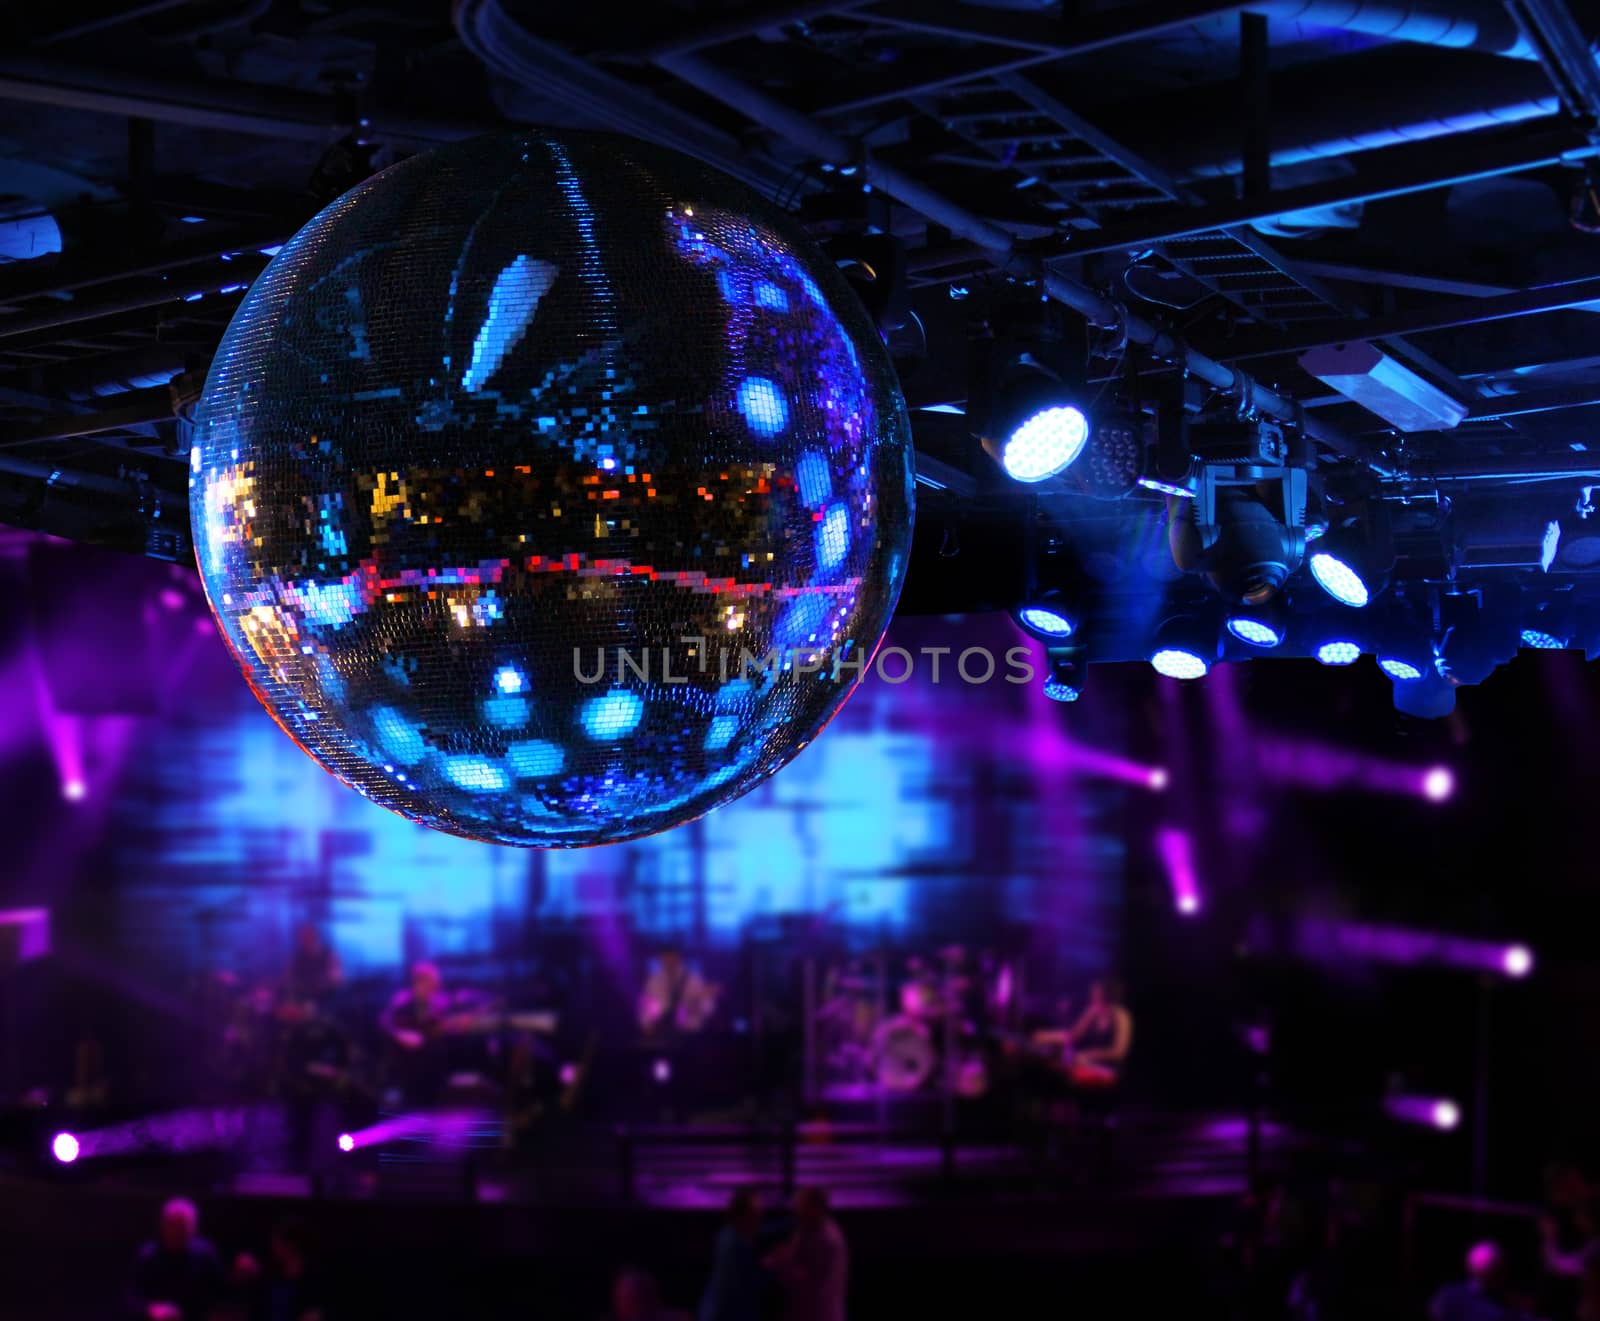 Band playing under disco mirror ball by anterovium